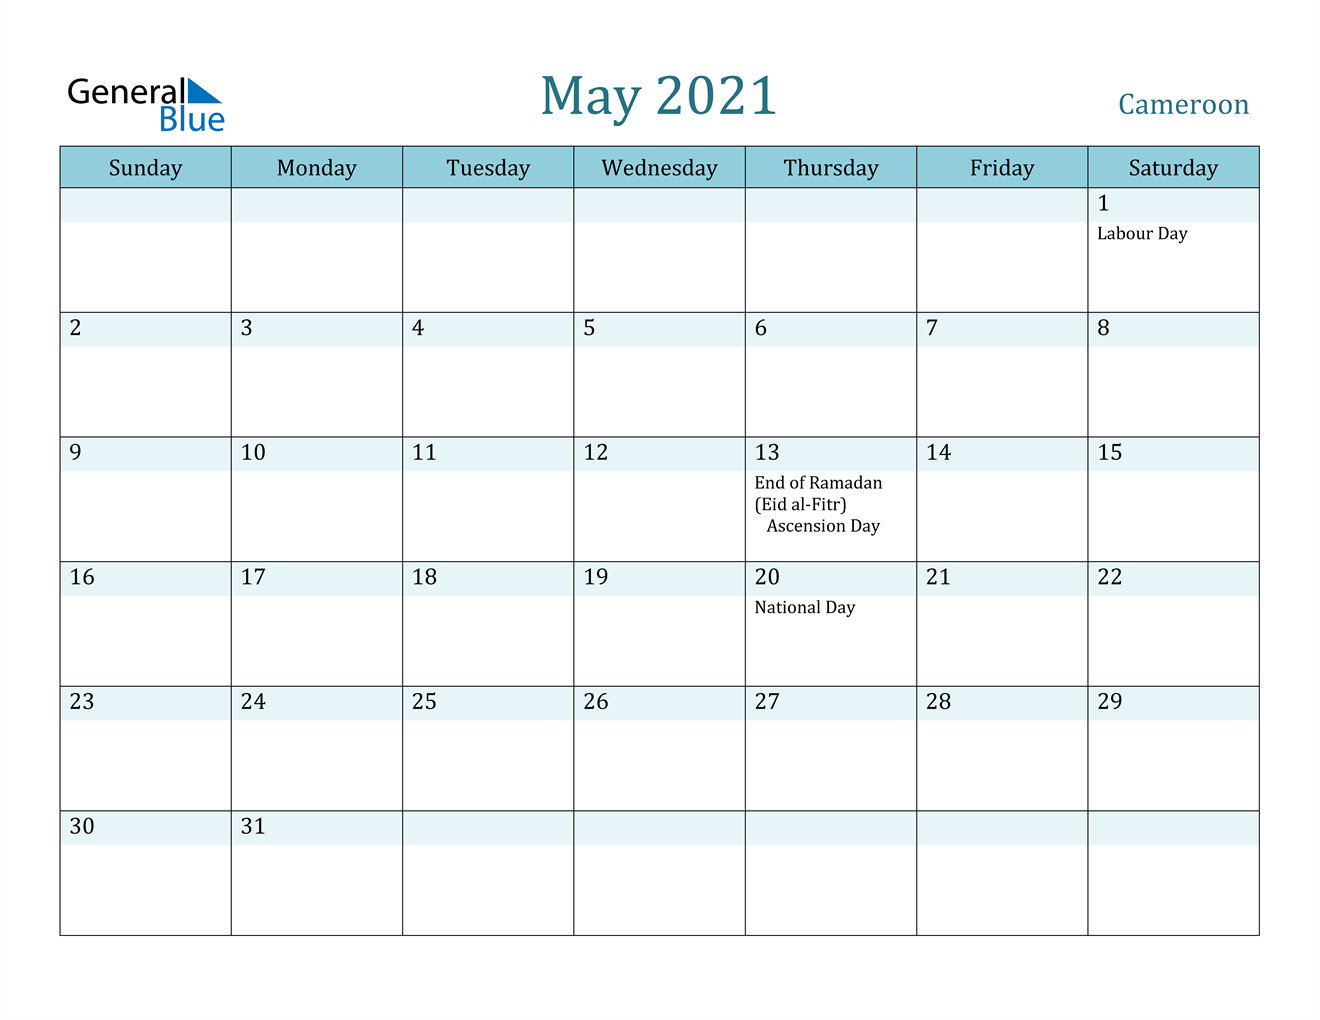 May 2021 Calendar - Cameroon